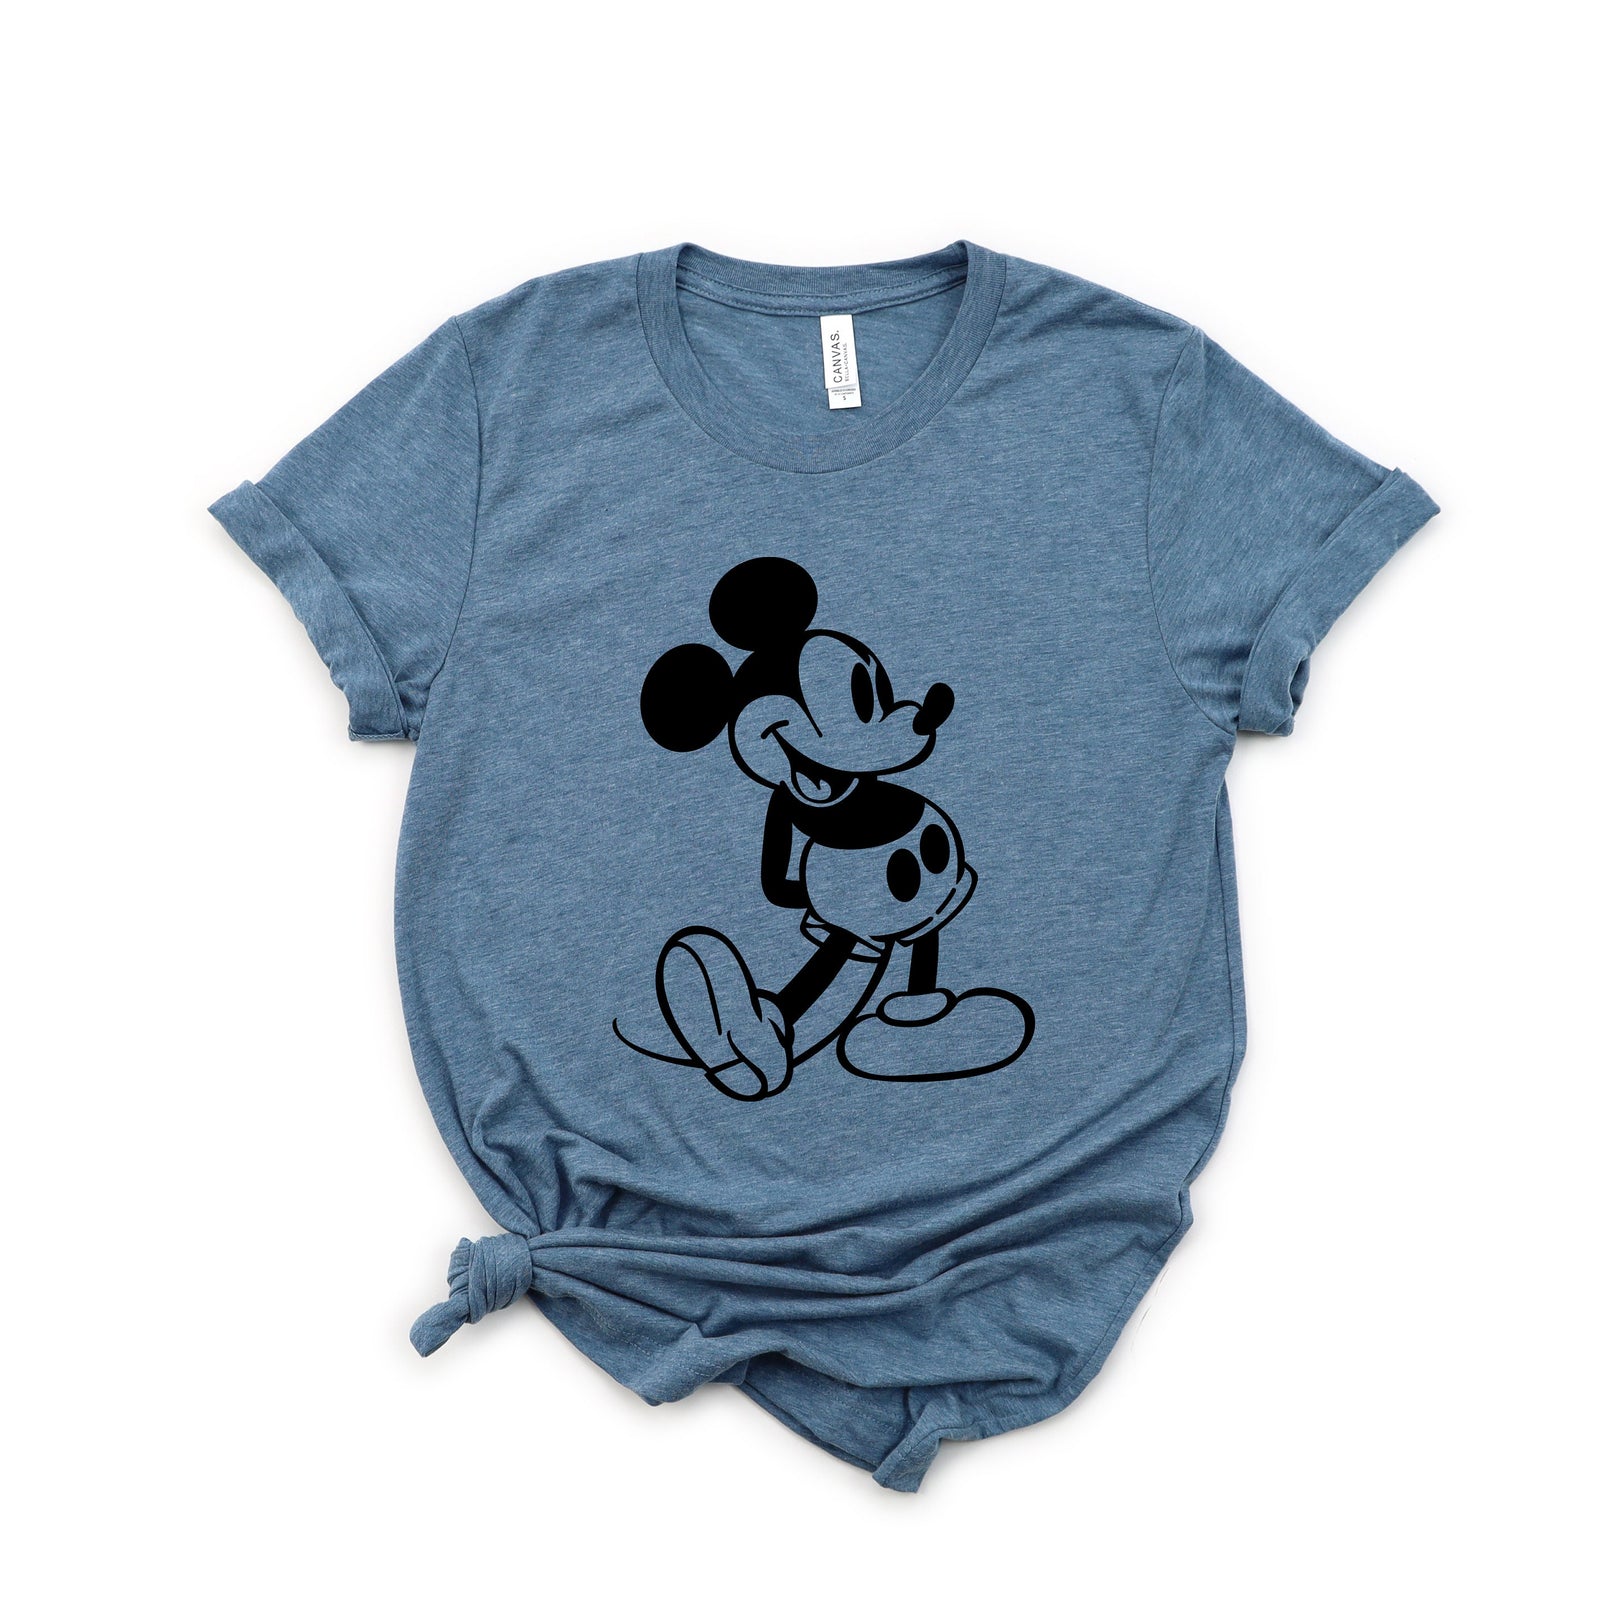 Vintage Mickey t shirt - Disney Trip Matching Shirts - Classic Mickey Mouse